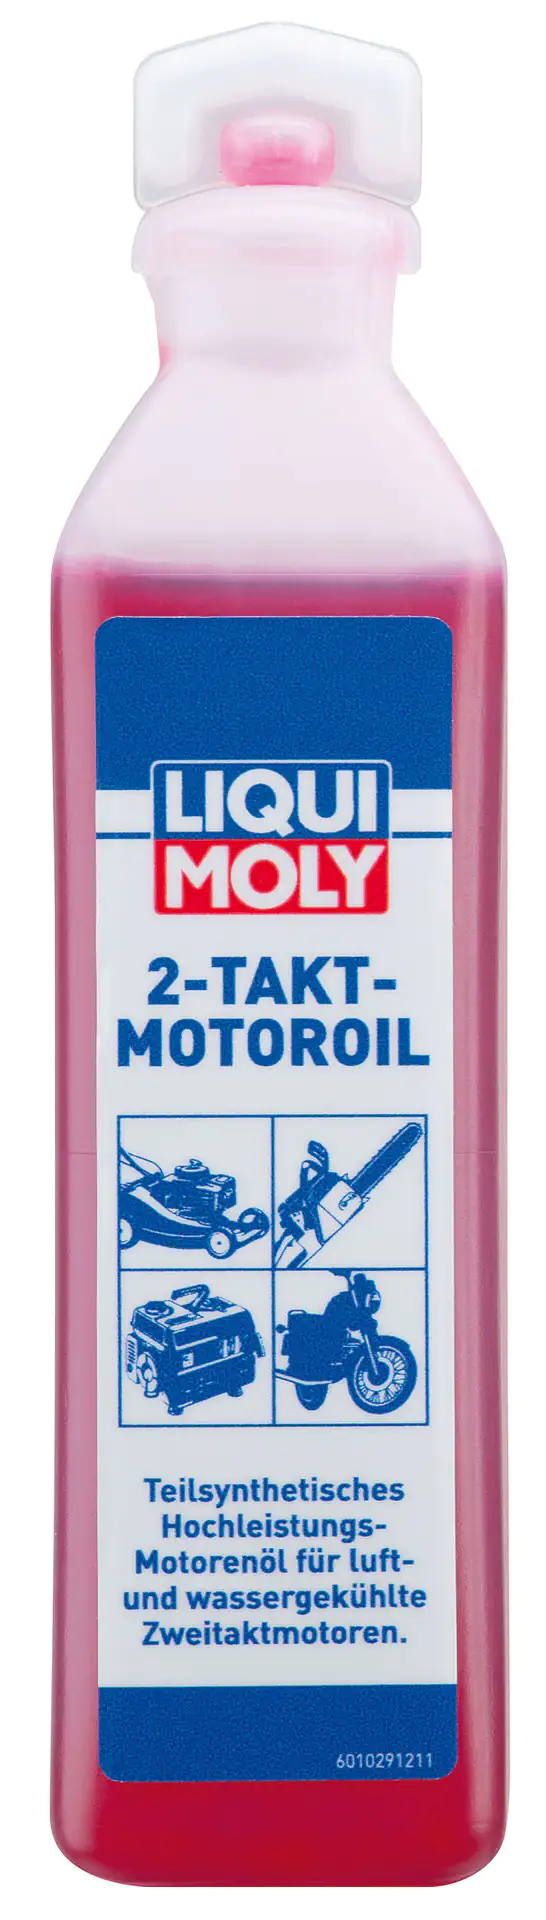 LIQUI MOLY Motoröl Öl 2-Takt-Motoroil selbstmischend 1L 1 Liter